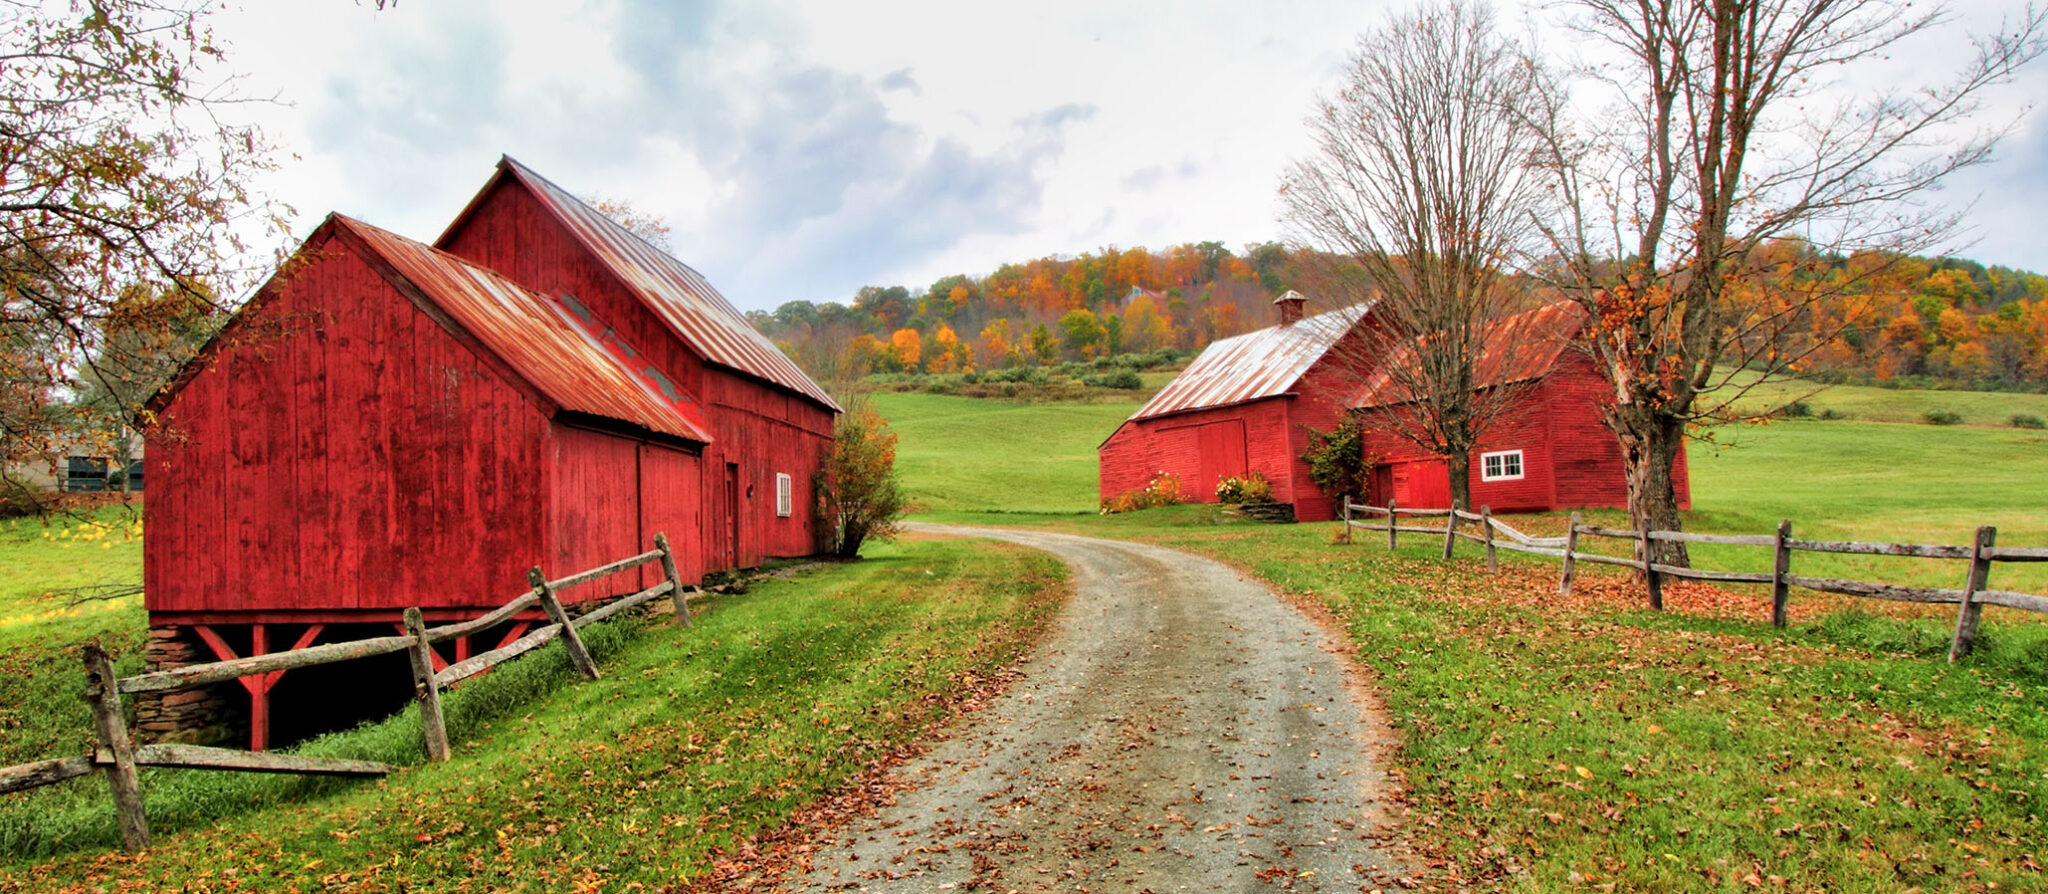 Американская ферма осенью. Старая ферма осень. Ферма осенью фото. Midwest Farm autumn.